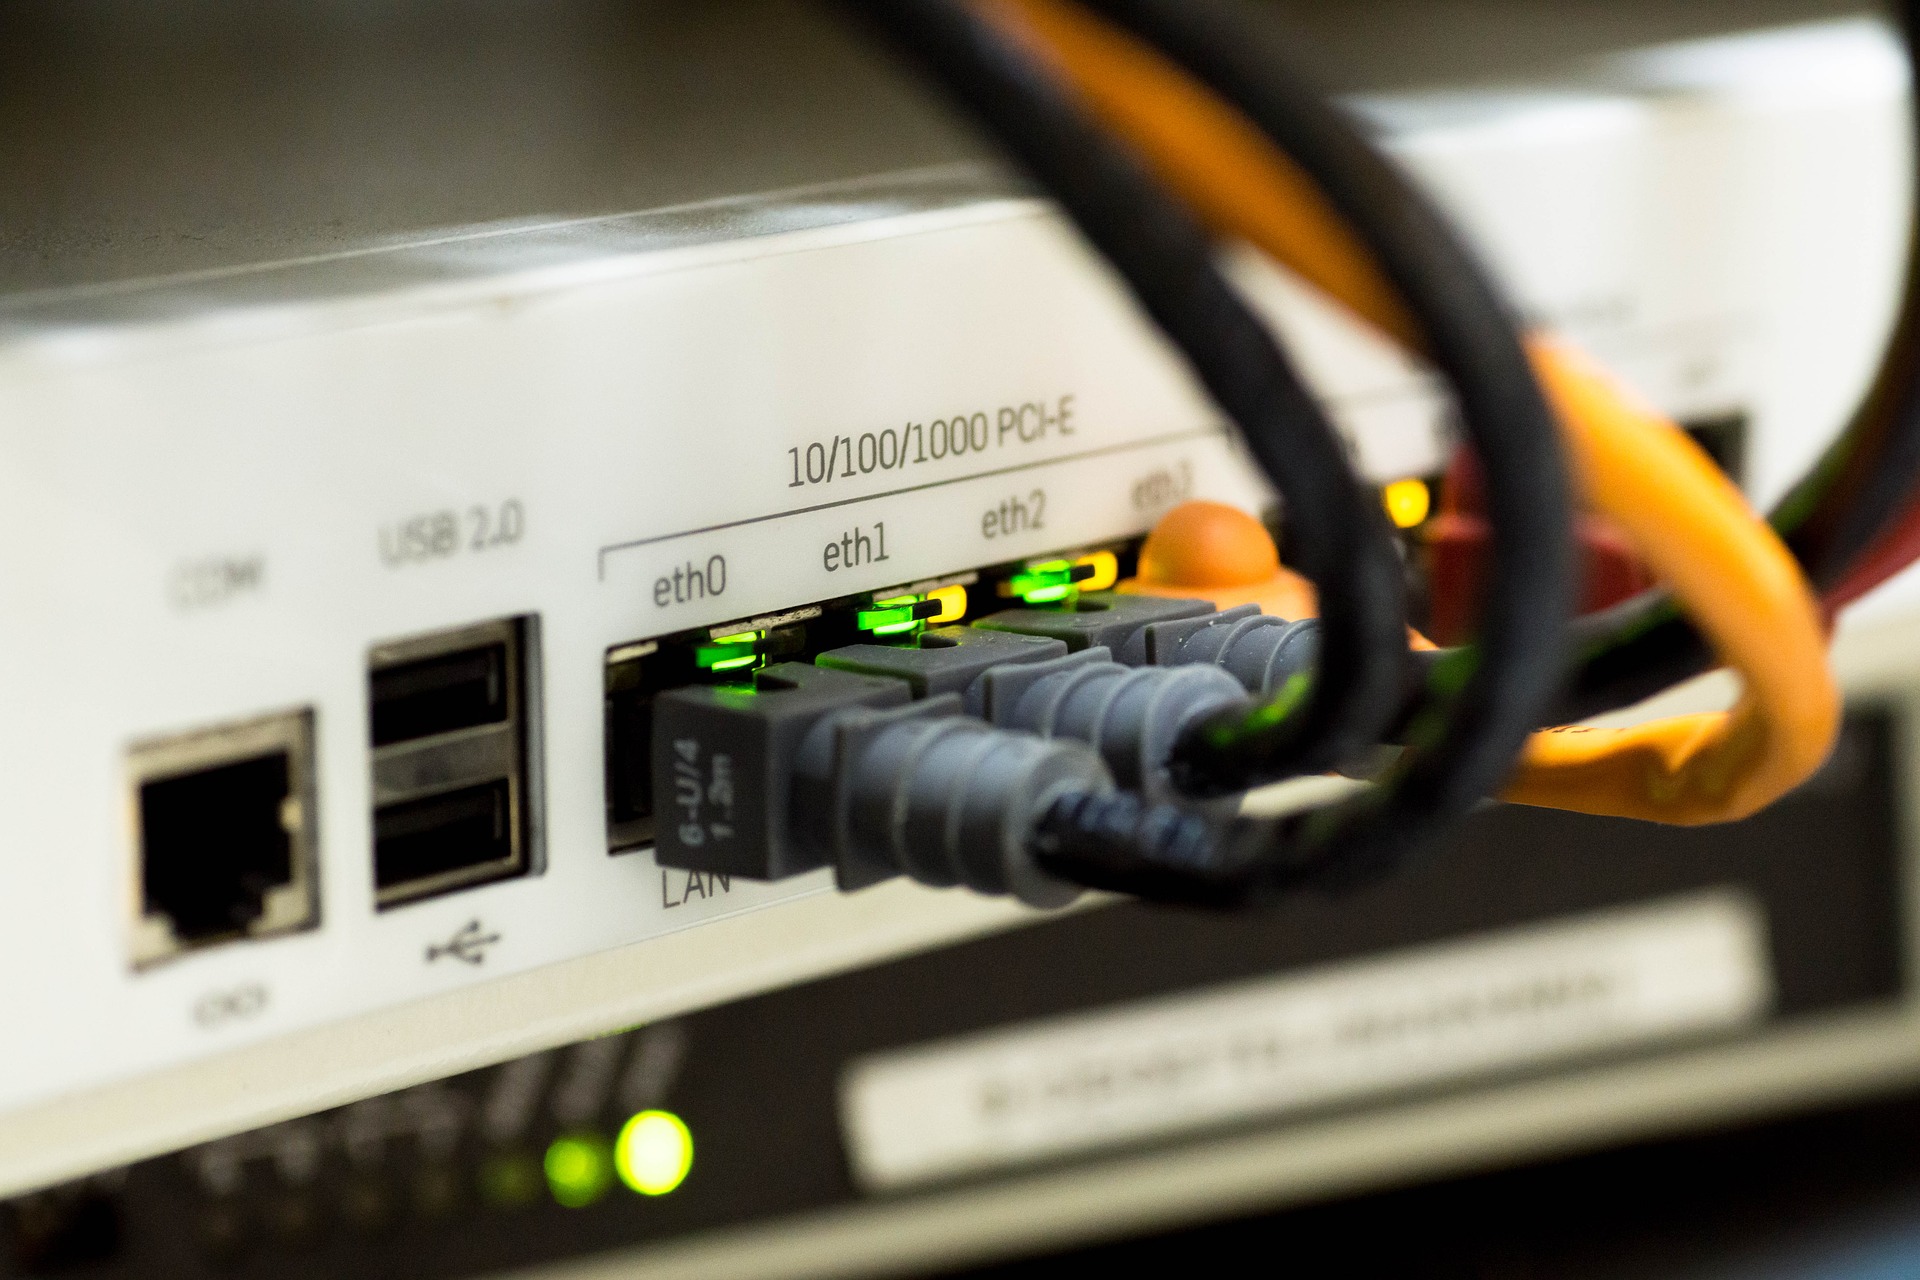 Ethernet: MAC Addresses 